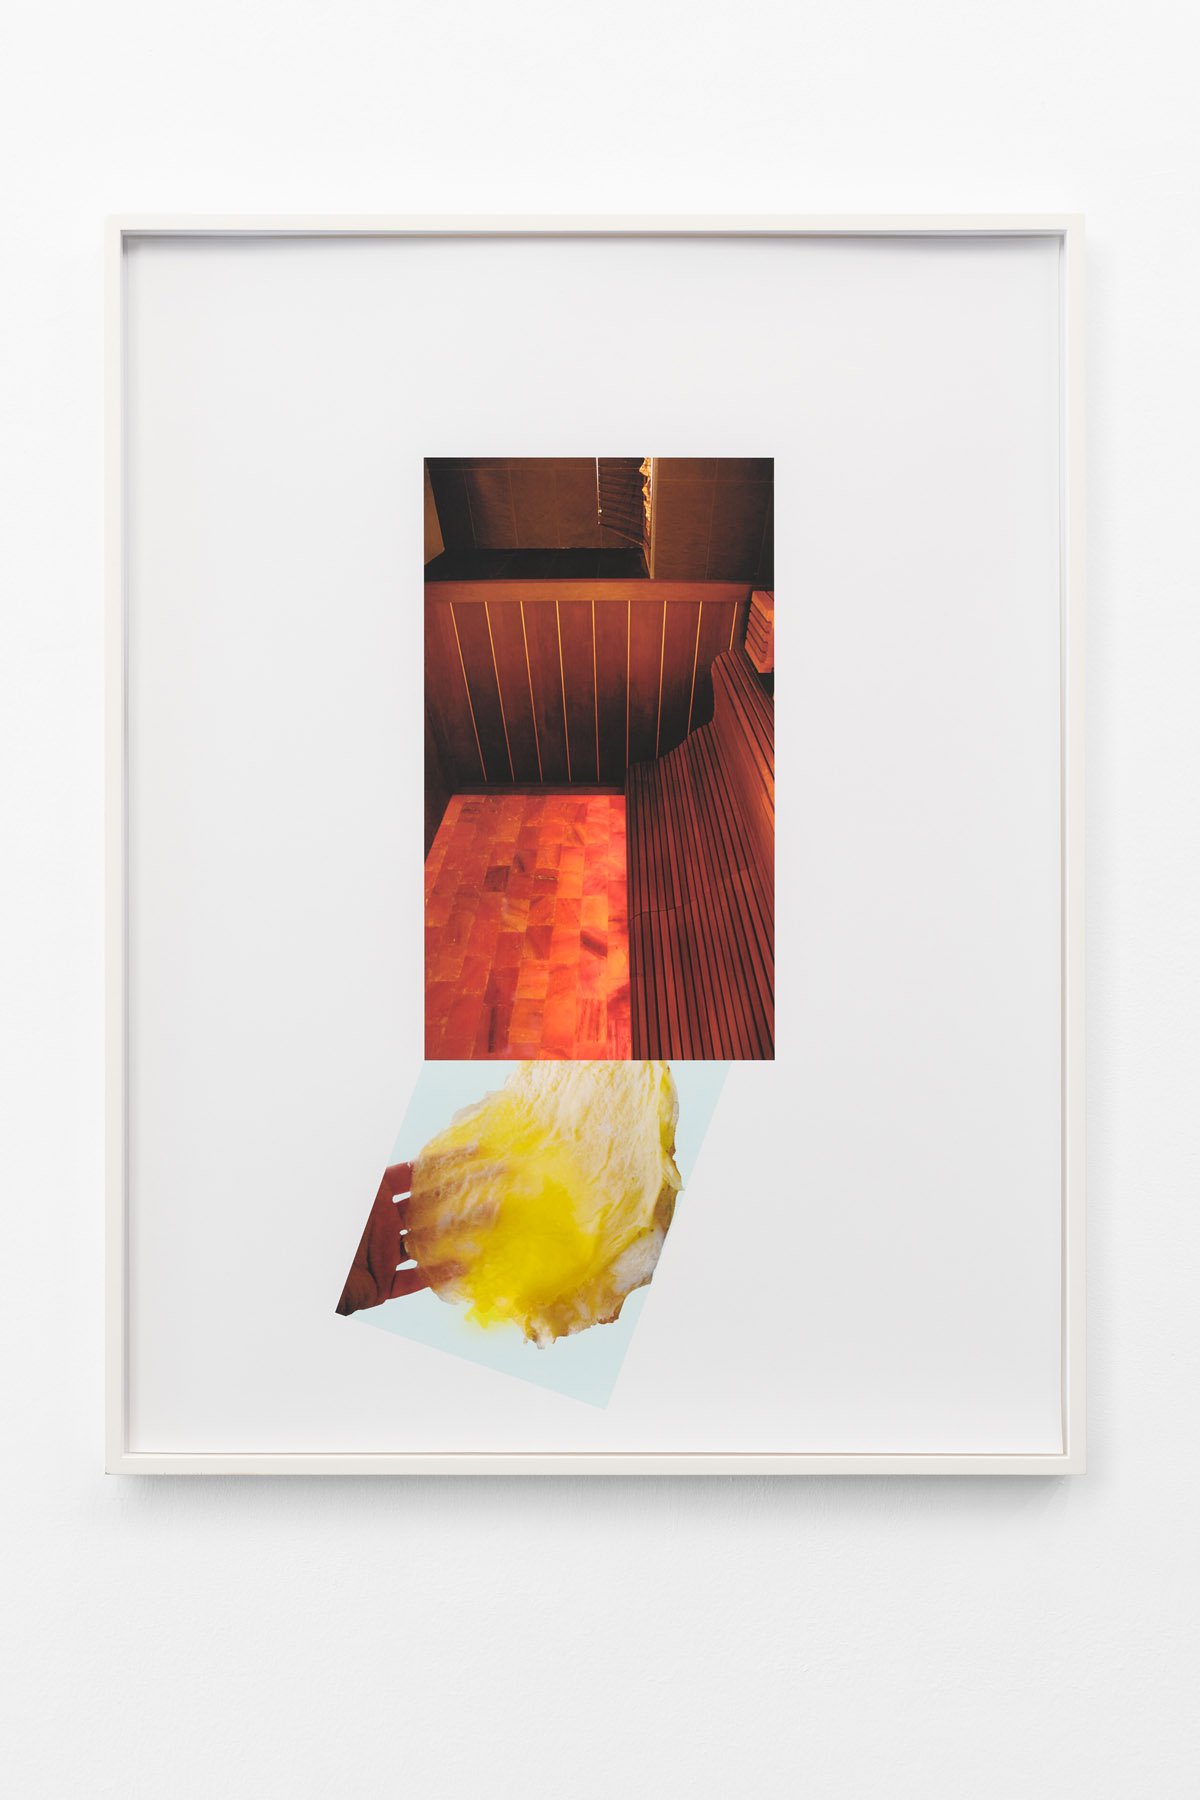 Lisa HolzerOmelette passing under Sauna, 2015Pigment print on cotton paper, acrylic paint on glass92 x 72 cm